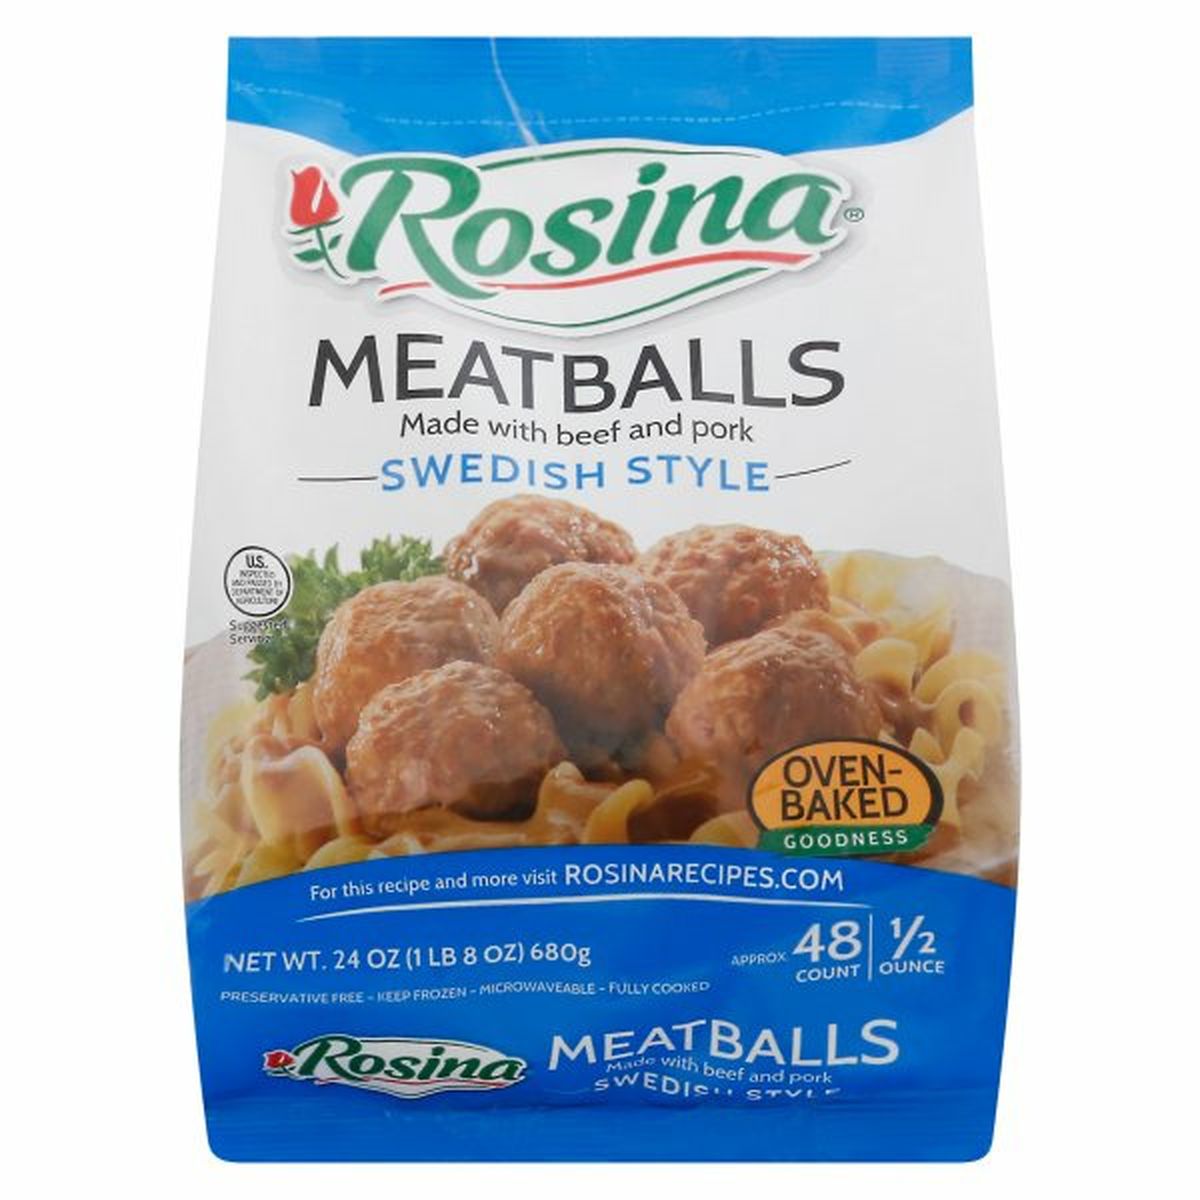 Calories in Rosina Meatballs, Swedish Style